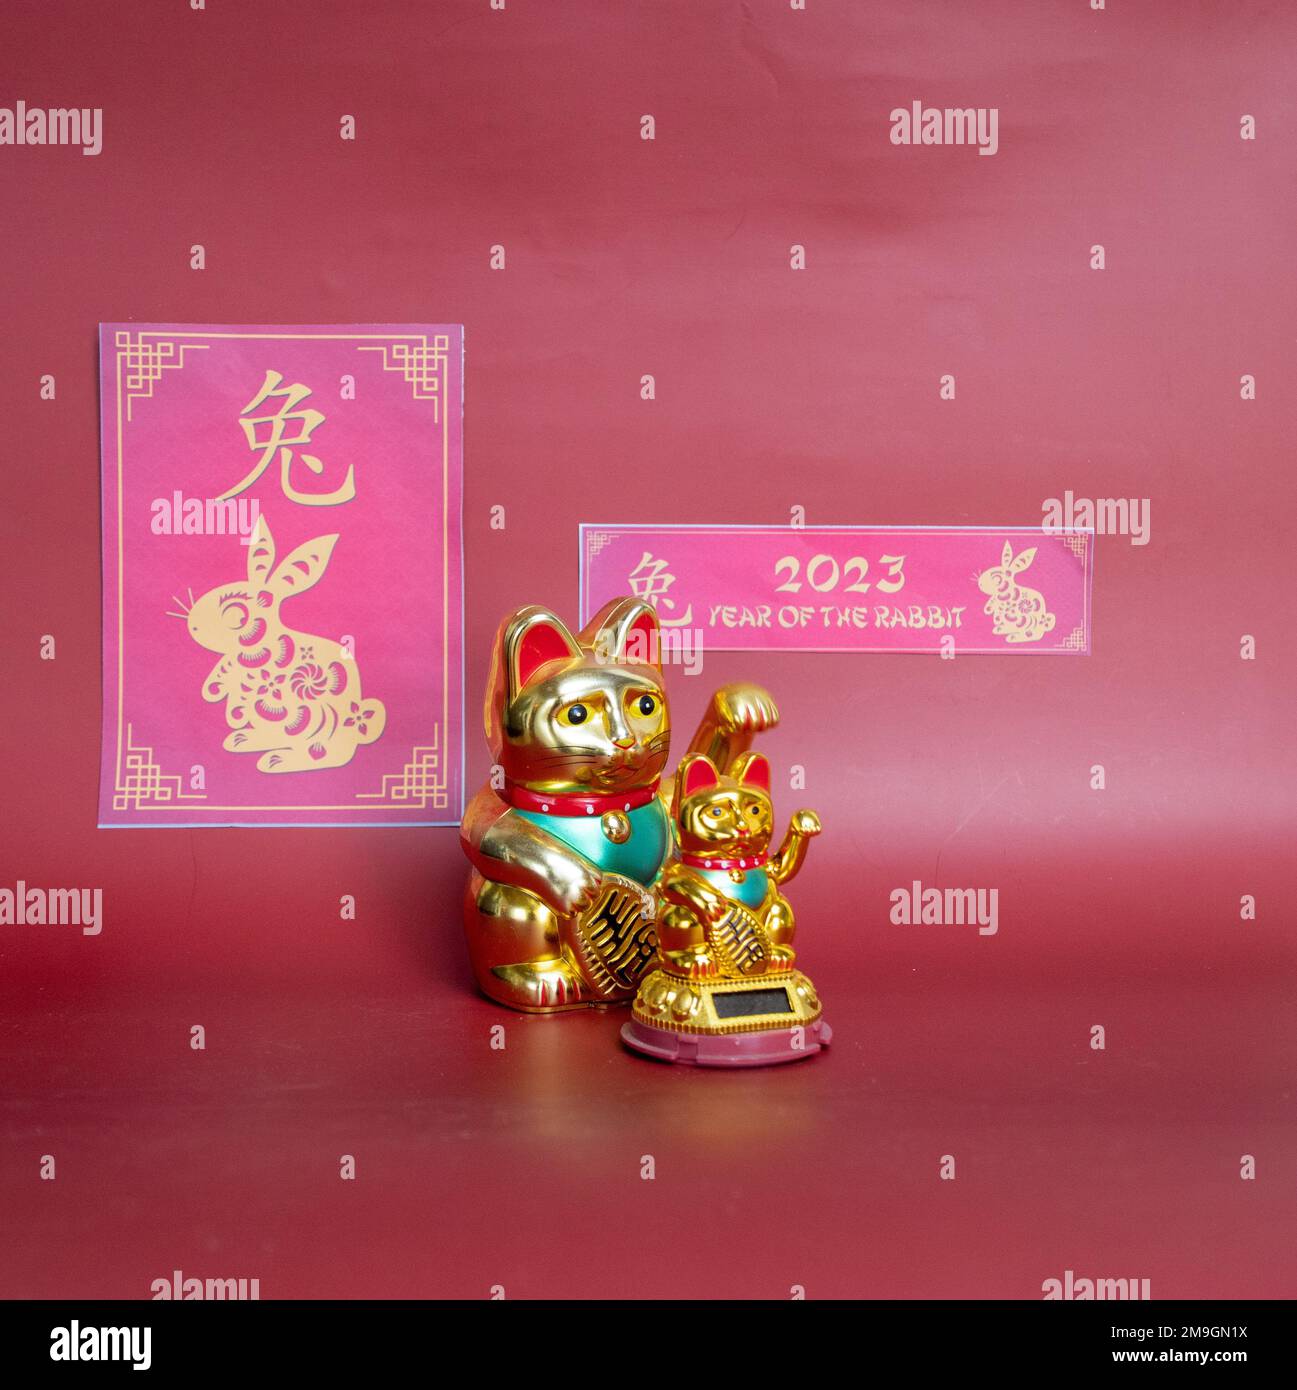 Neighbor Spotlight: Asia Crafts is Chinatown's Hello Kitty Haven